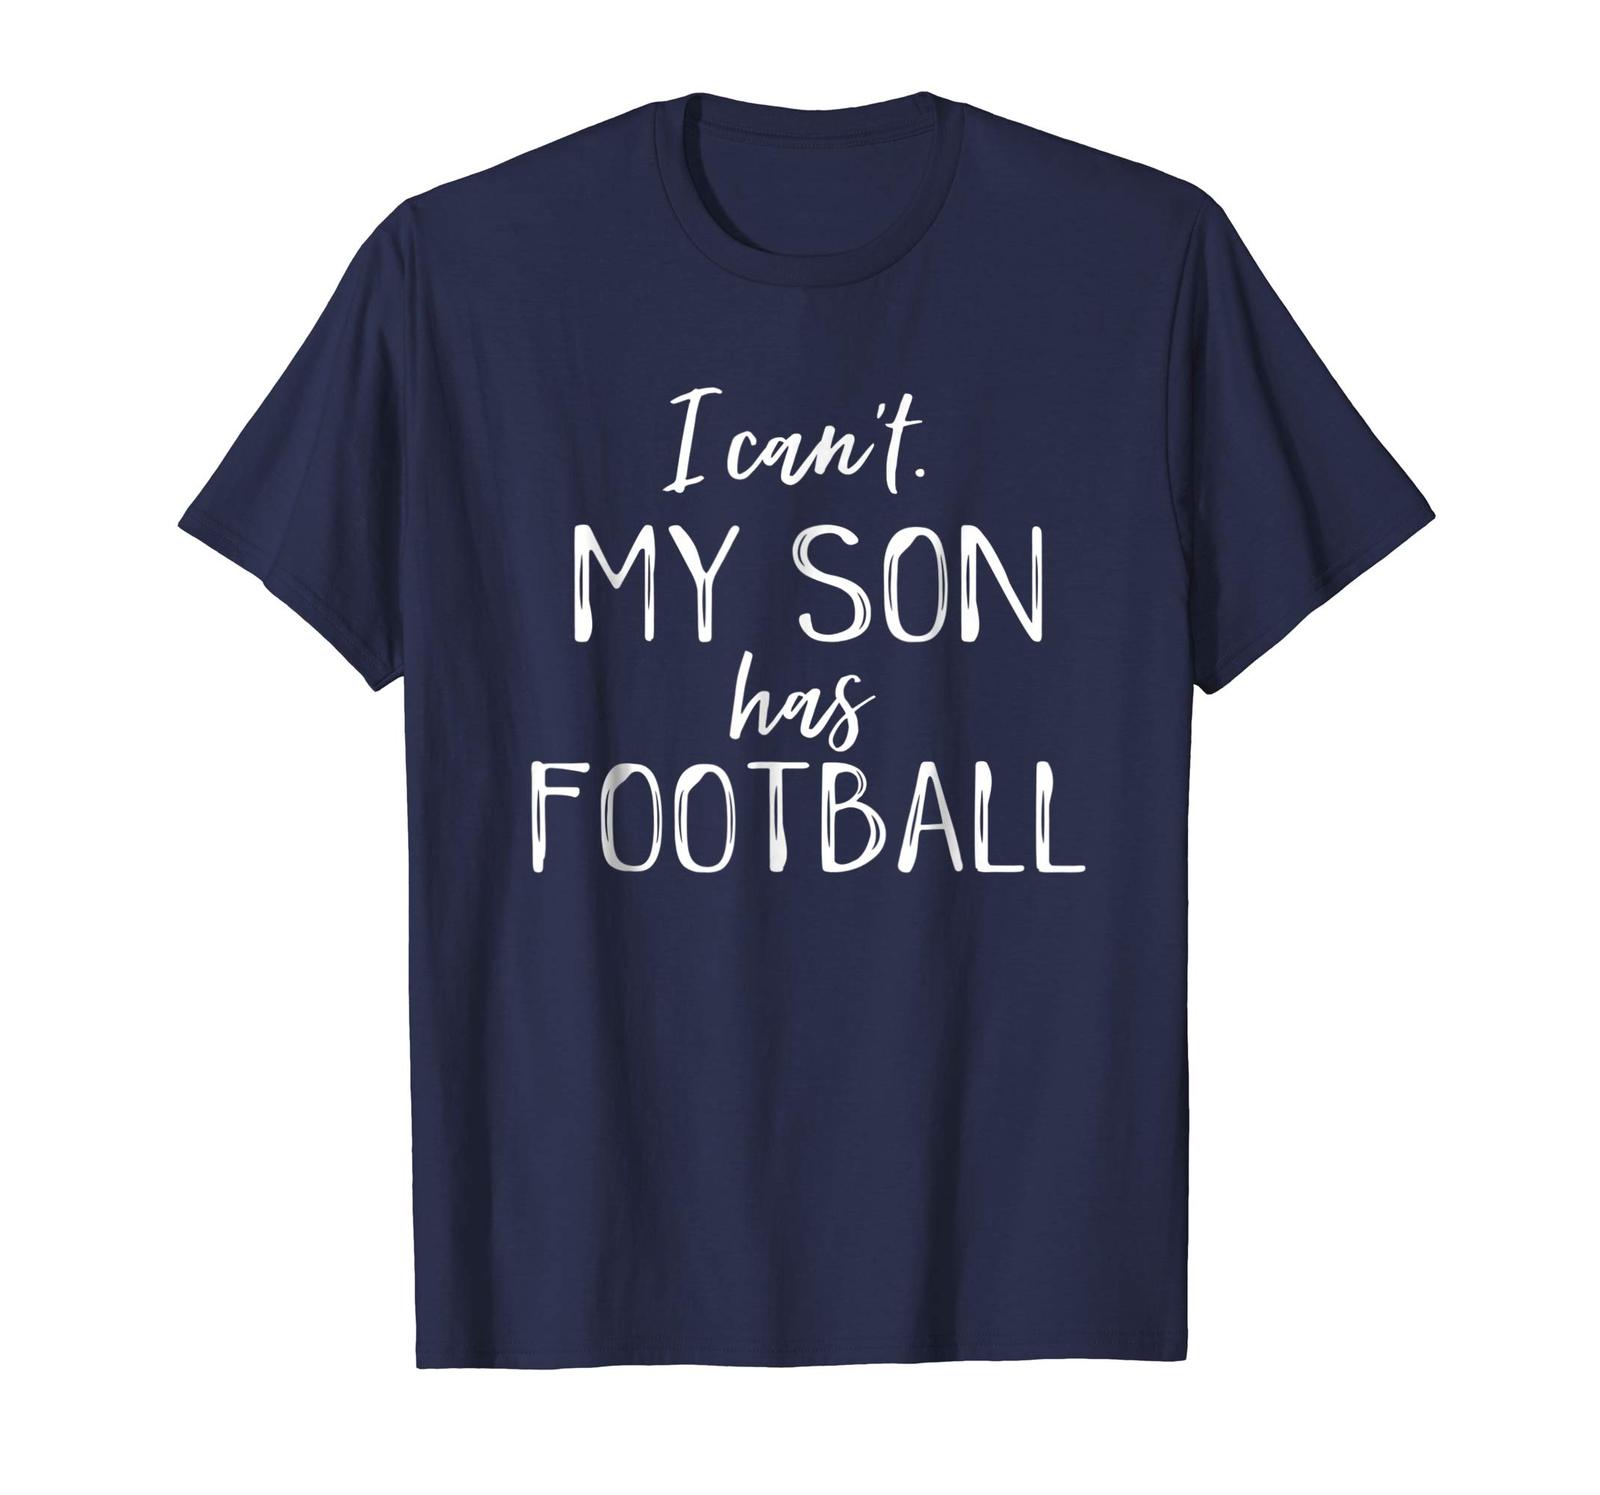 Fashion Shirts - I Can't. My Son Has Football Shirt Funny Parent Mom ...